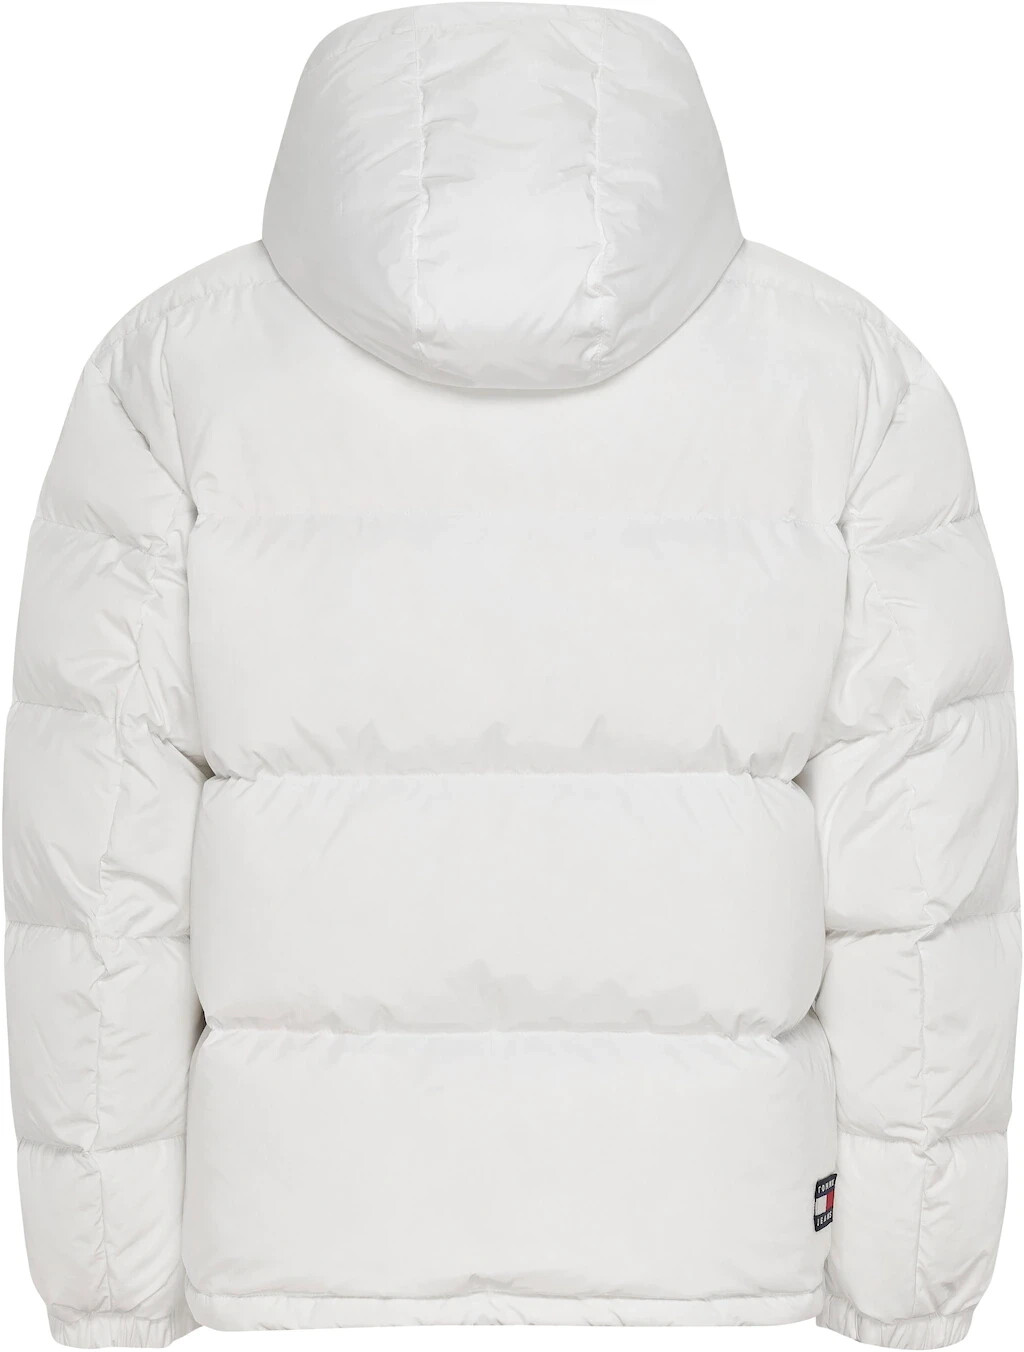 Tommy Hilfiger Jacket Puffer (DM0DM15445) € bei Hood 127,99 Removable white ab Alaska | Preisvergleich